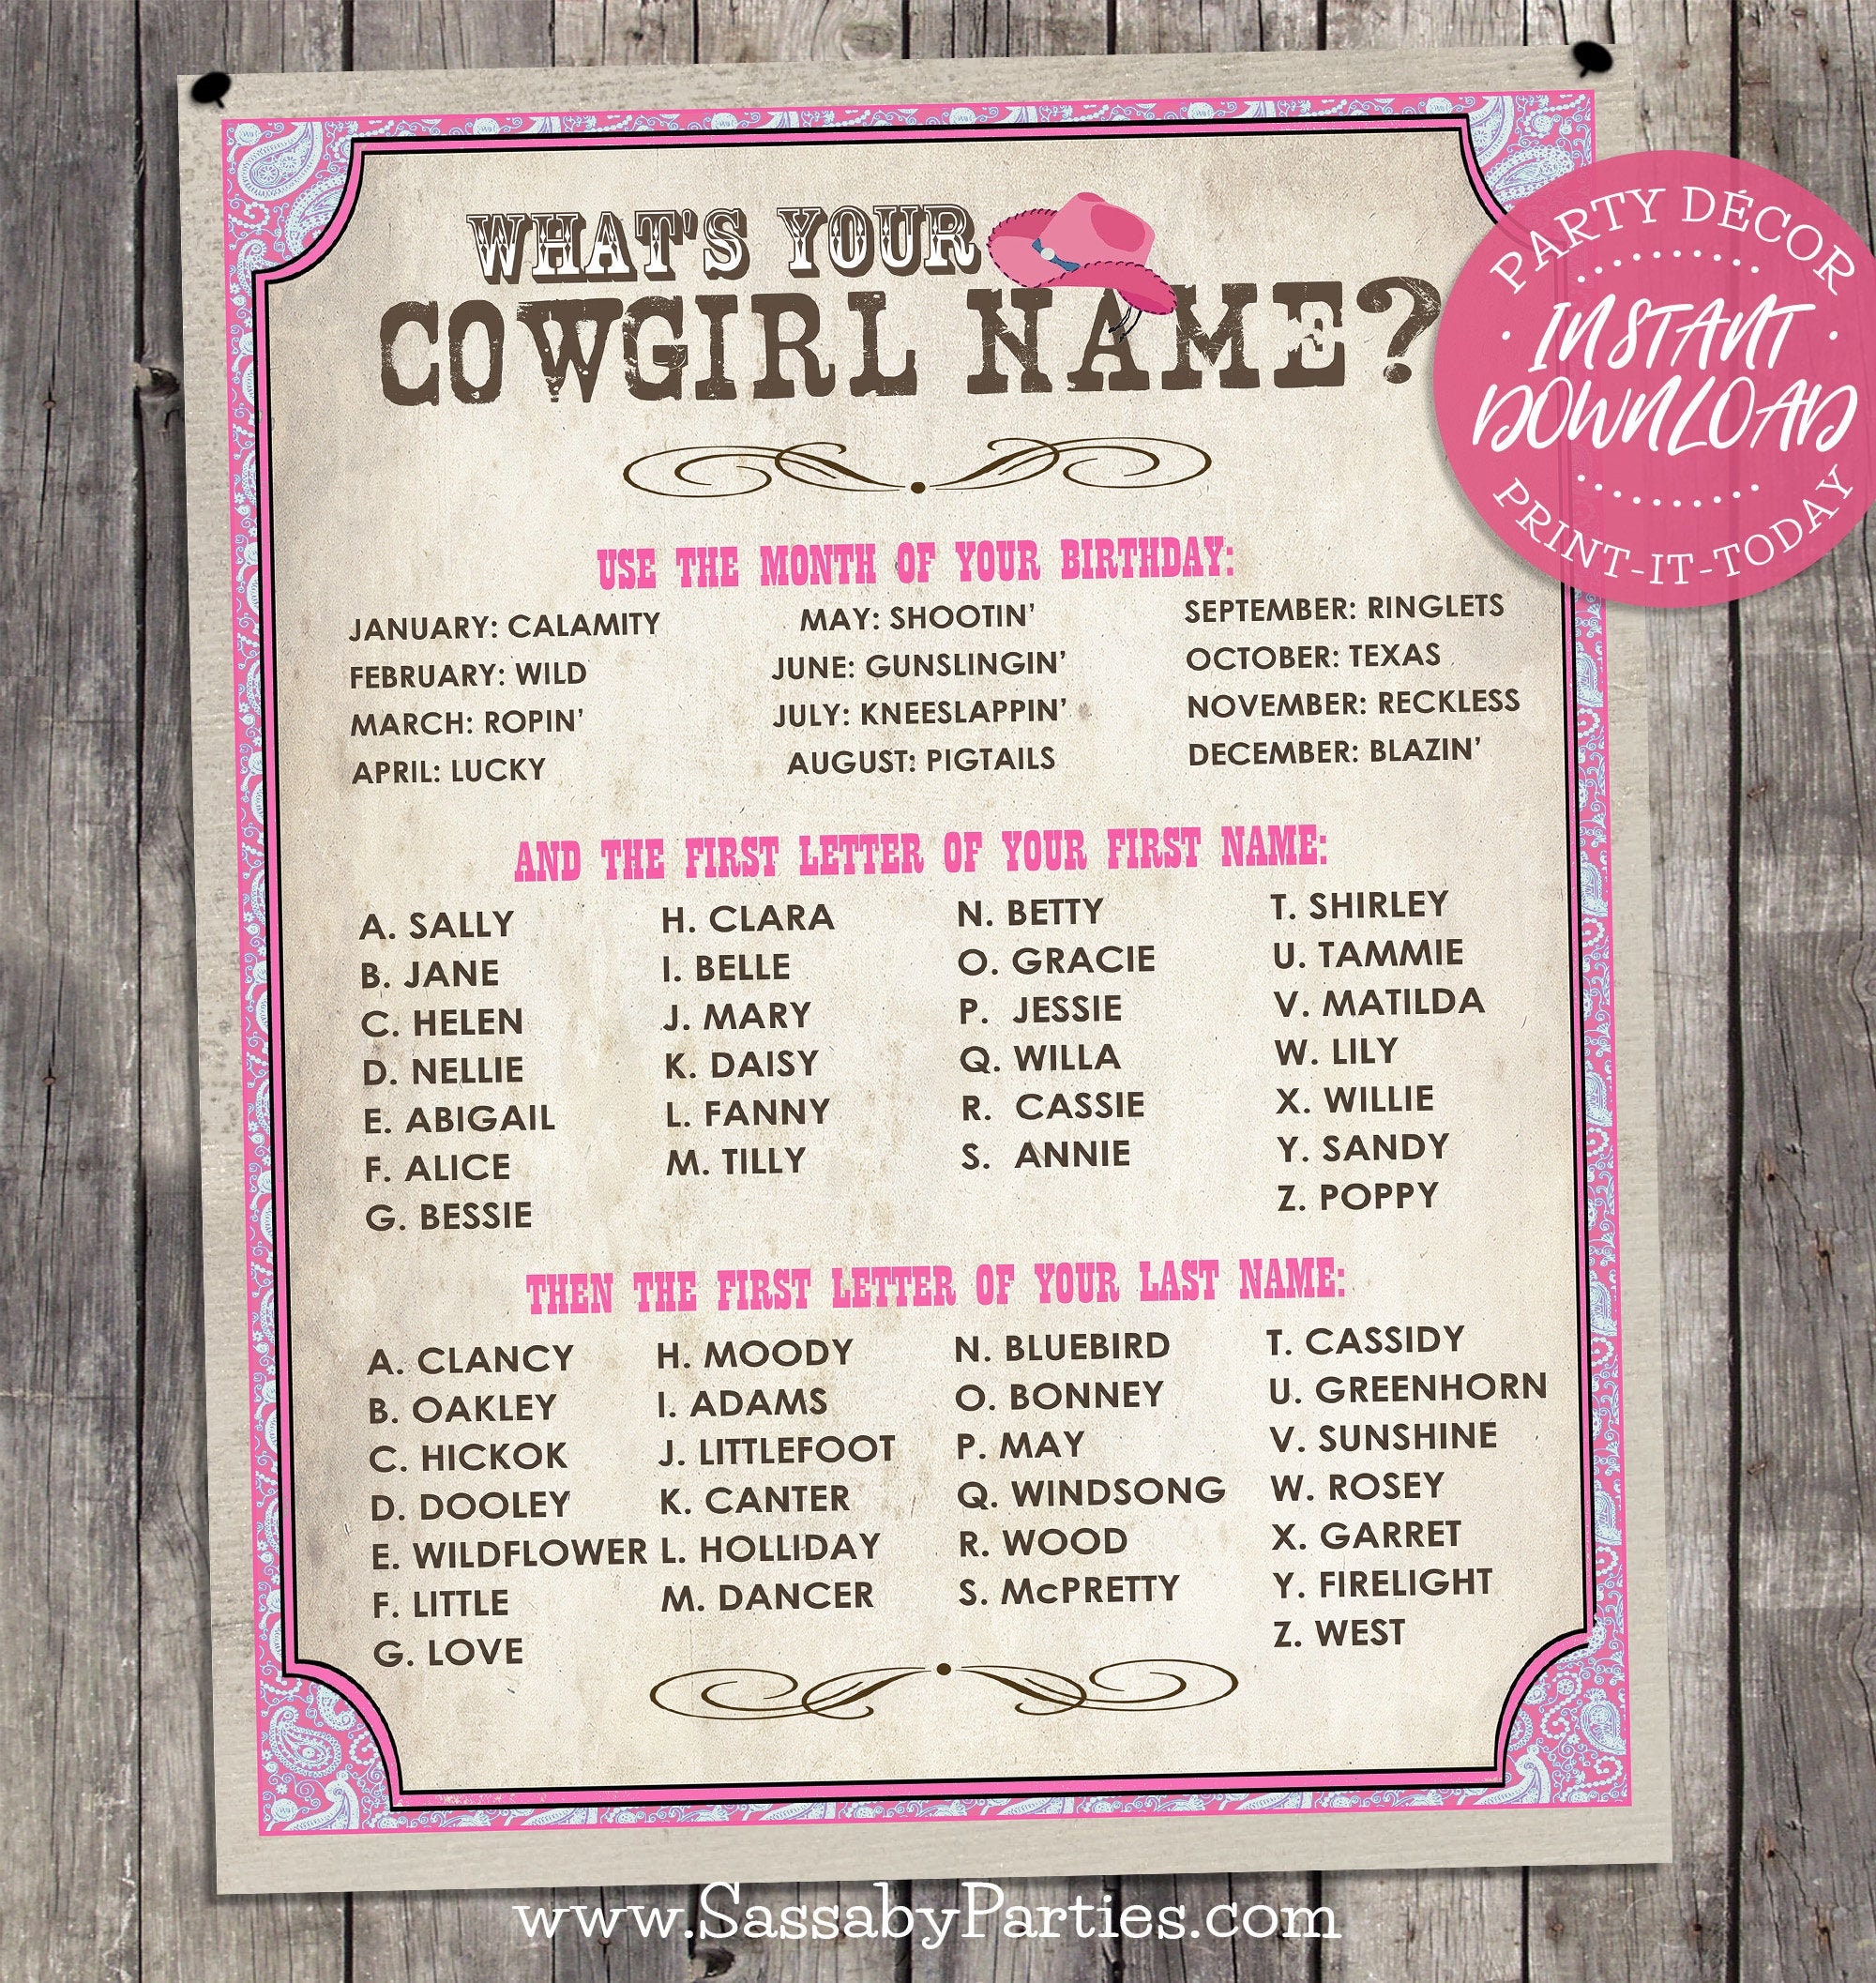 cowgirl nicknames generator